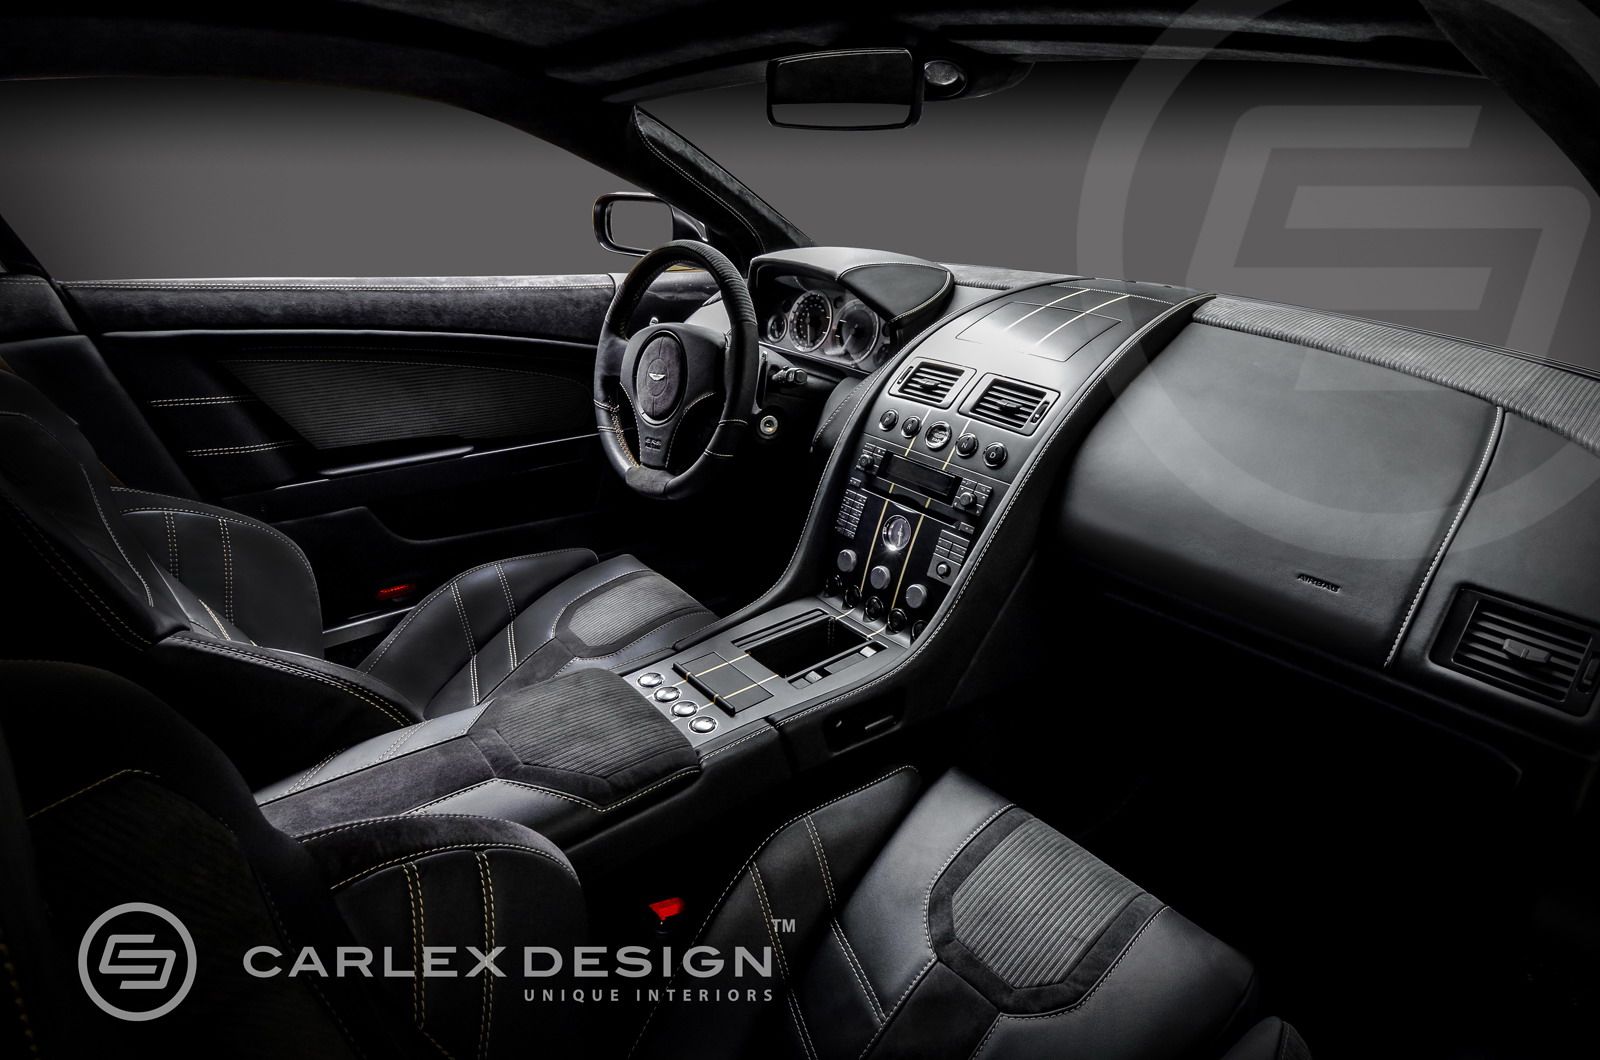 2014 Aston Martin DB9 By Carlex Design